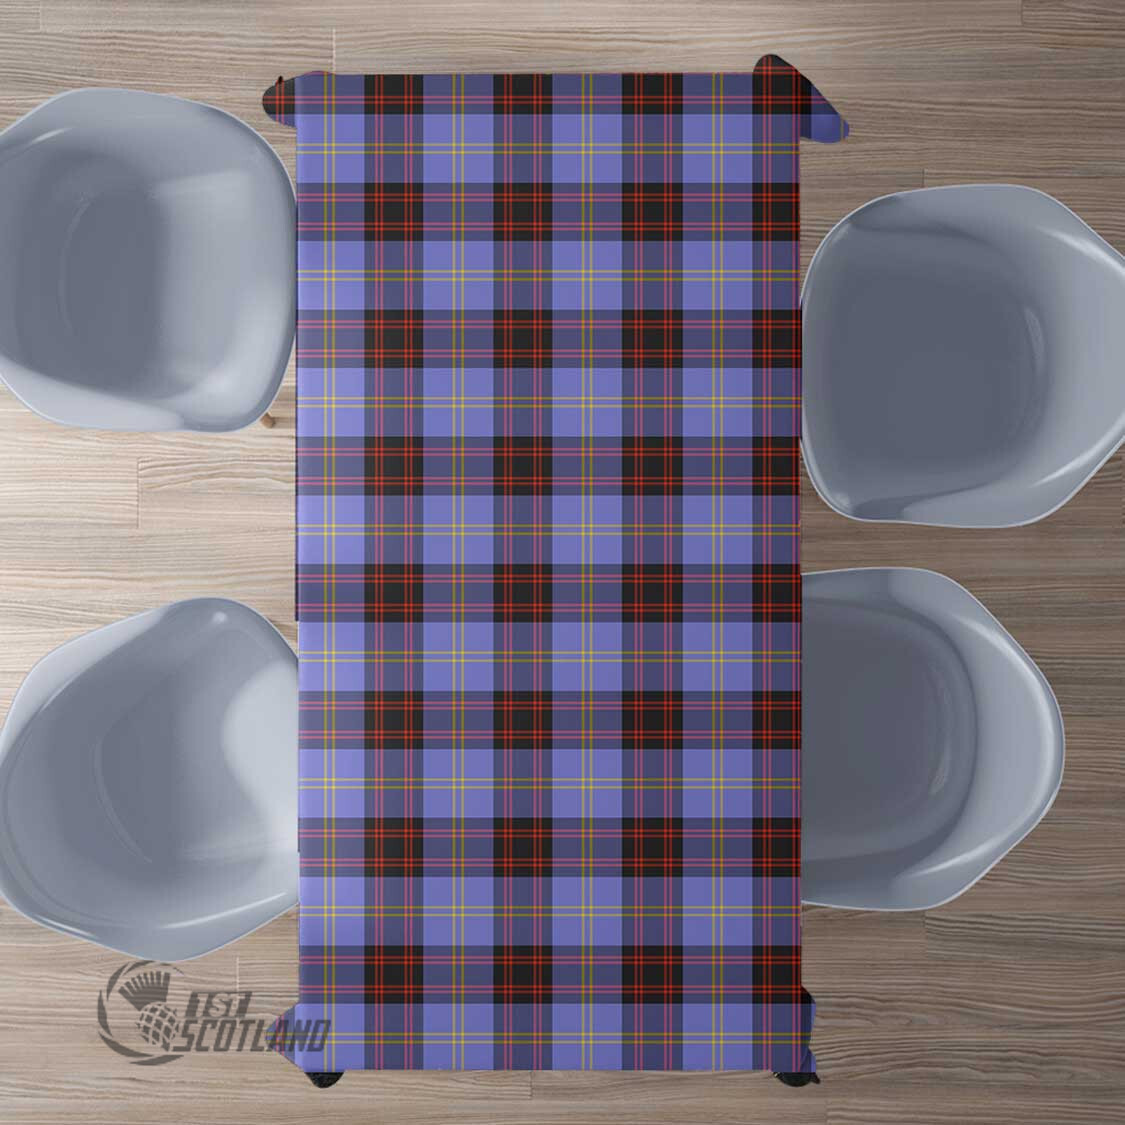 Scottish Rutherford Tartan Rectangle Tablecloth Full Plaid